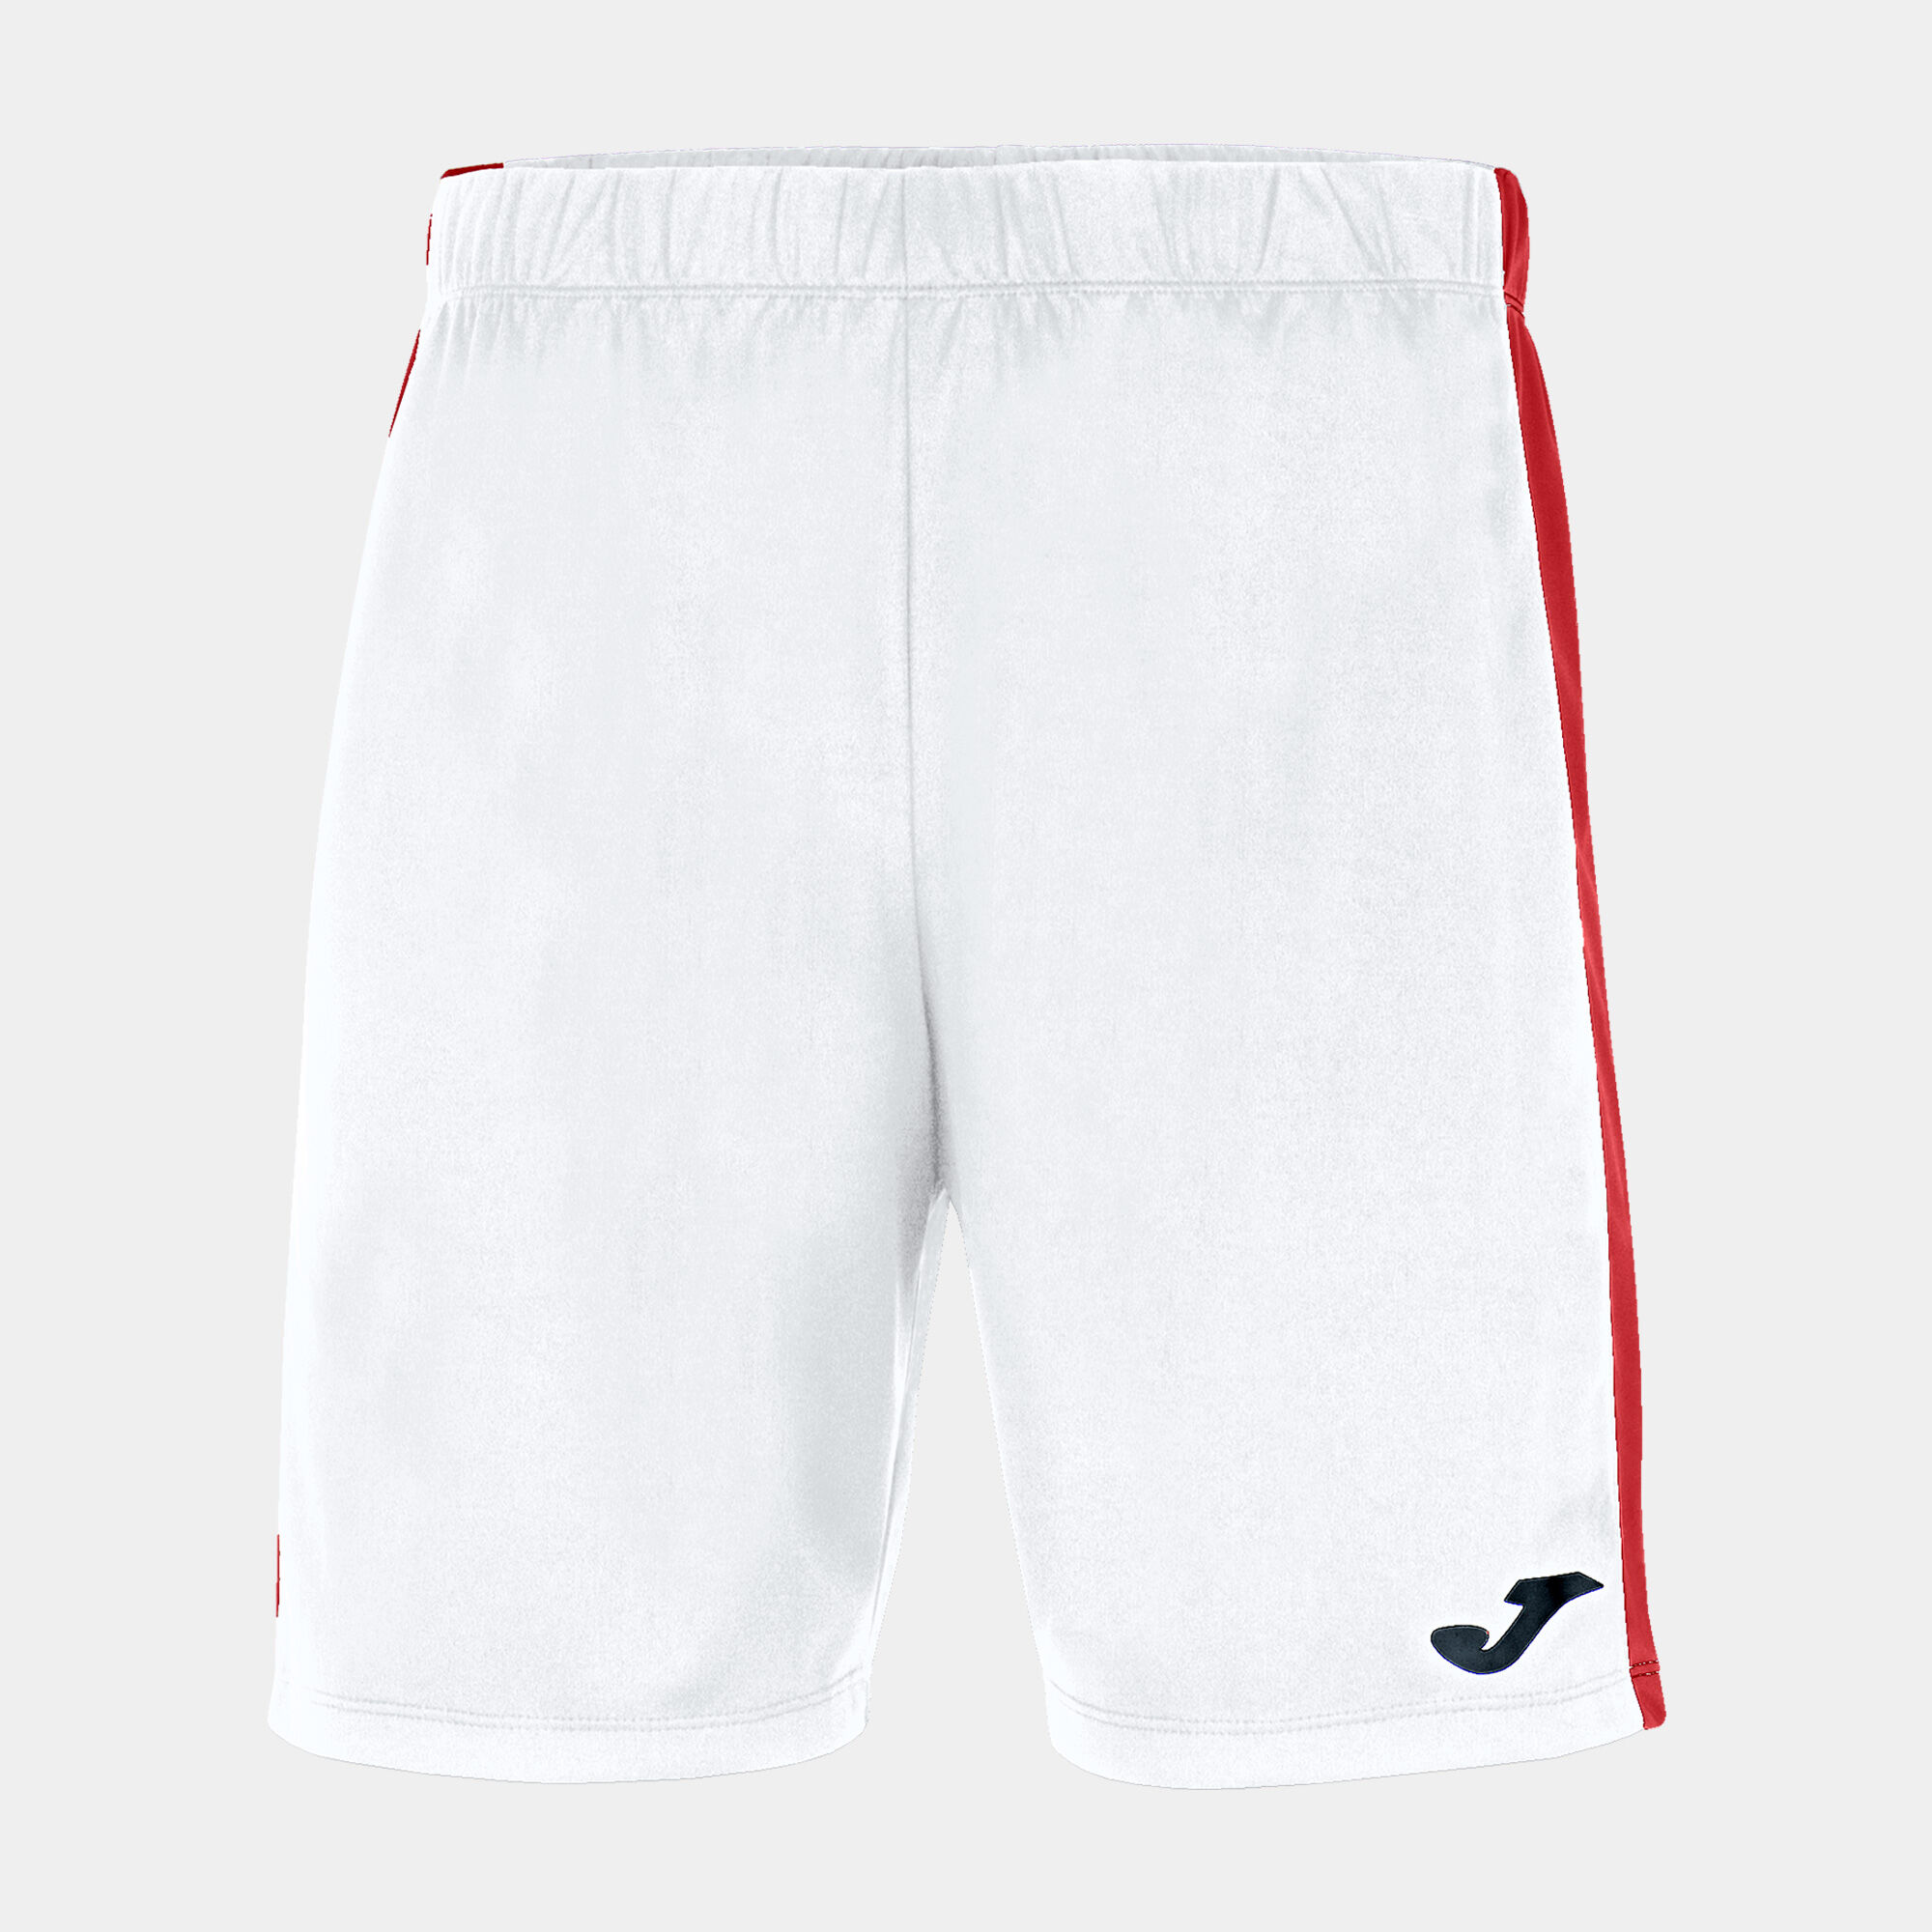 Renueva tu vestuario deportivo con este pantalón Joma por solo 13 euros